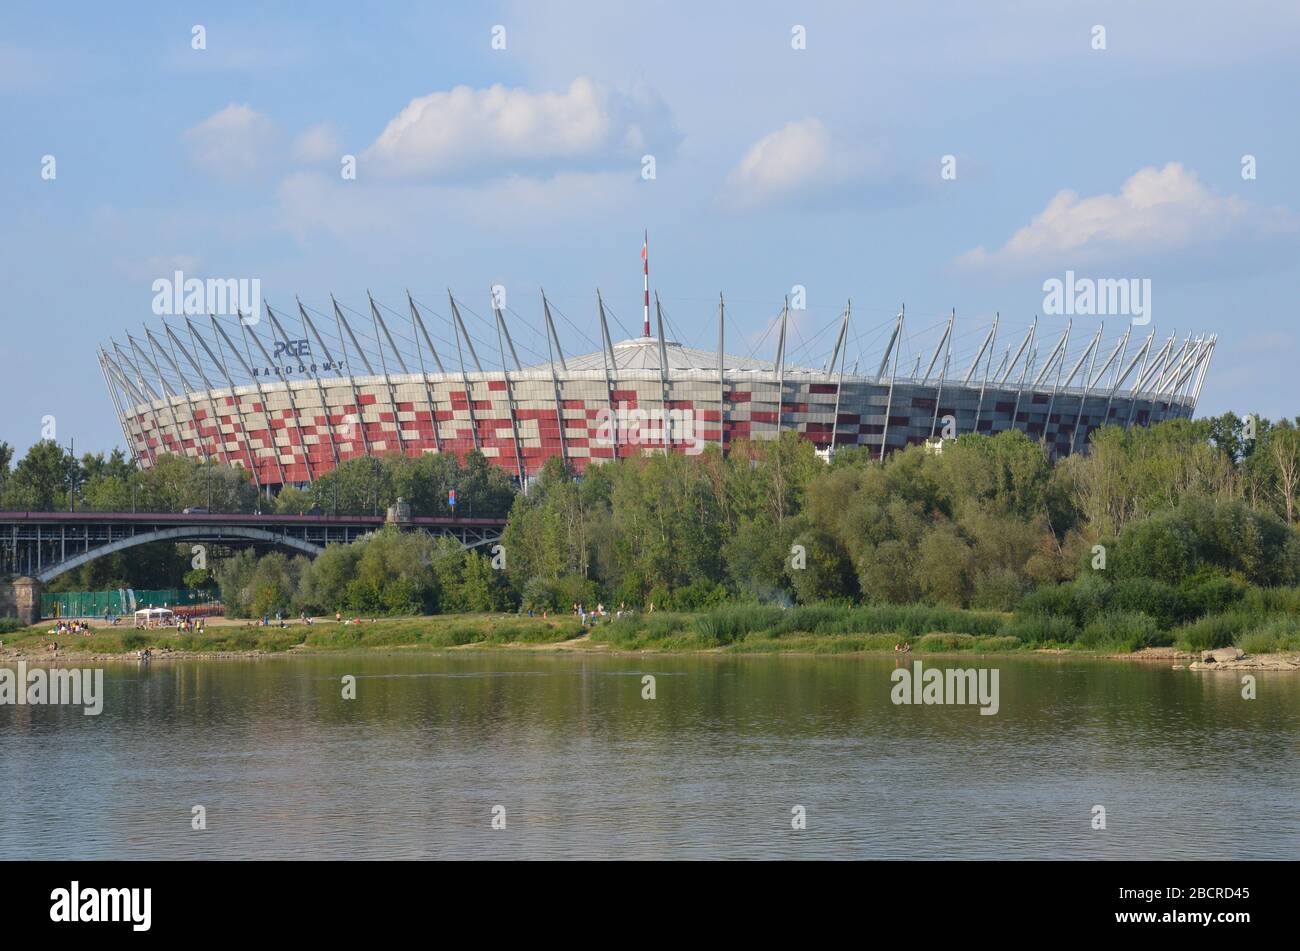 PGE Narodowy (Polish national stadium) in Praga and Poniatowski Bridge, viewed from the West Bank of the Vistula river, August, Warsaw, Poland, 2019 Stock Photo